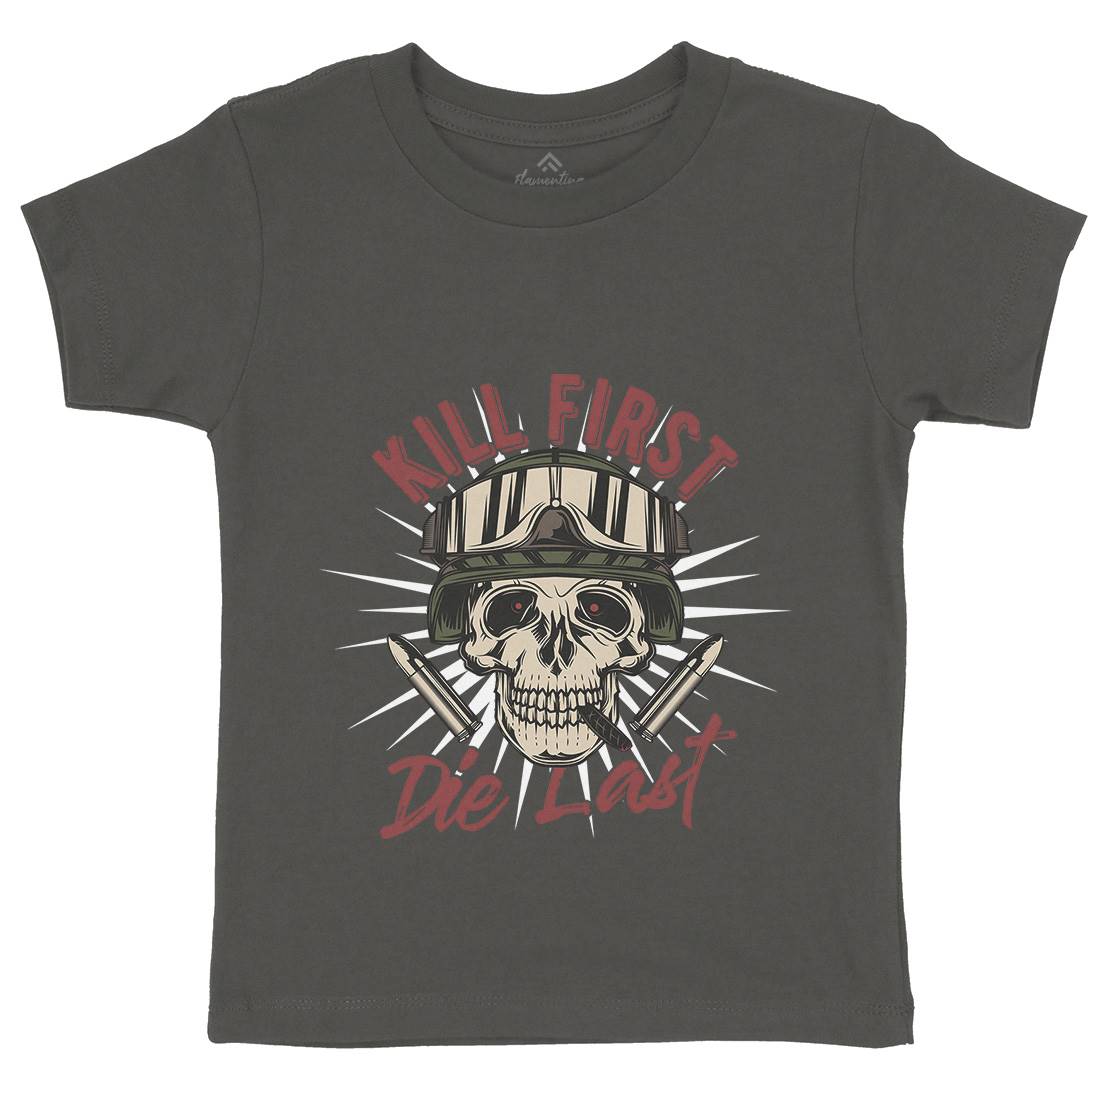 Kill First Kids Crew Neck T-Shirt Army C890